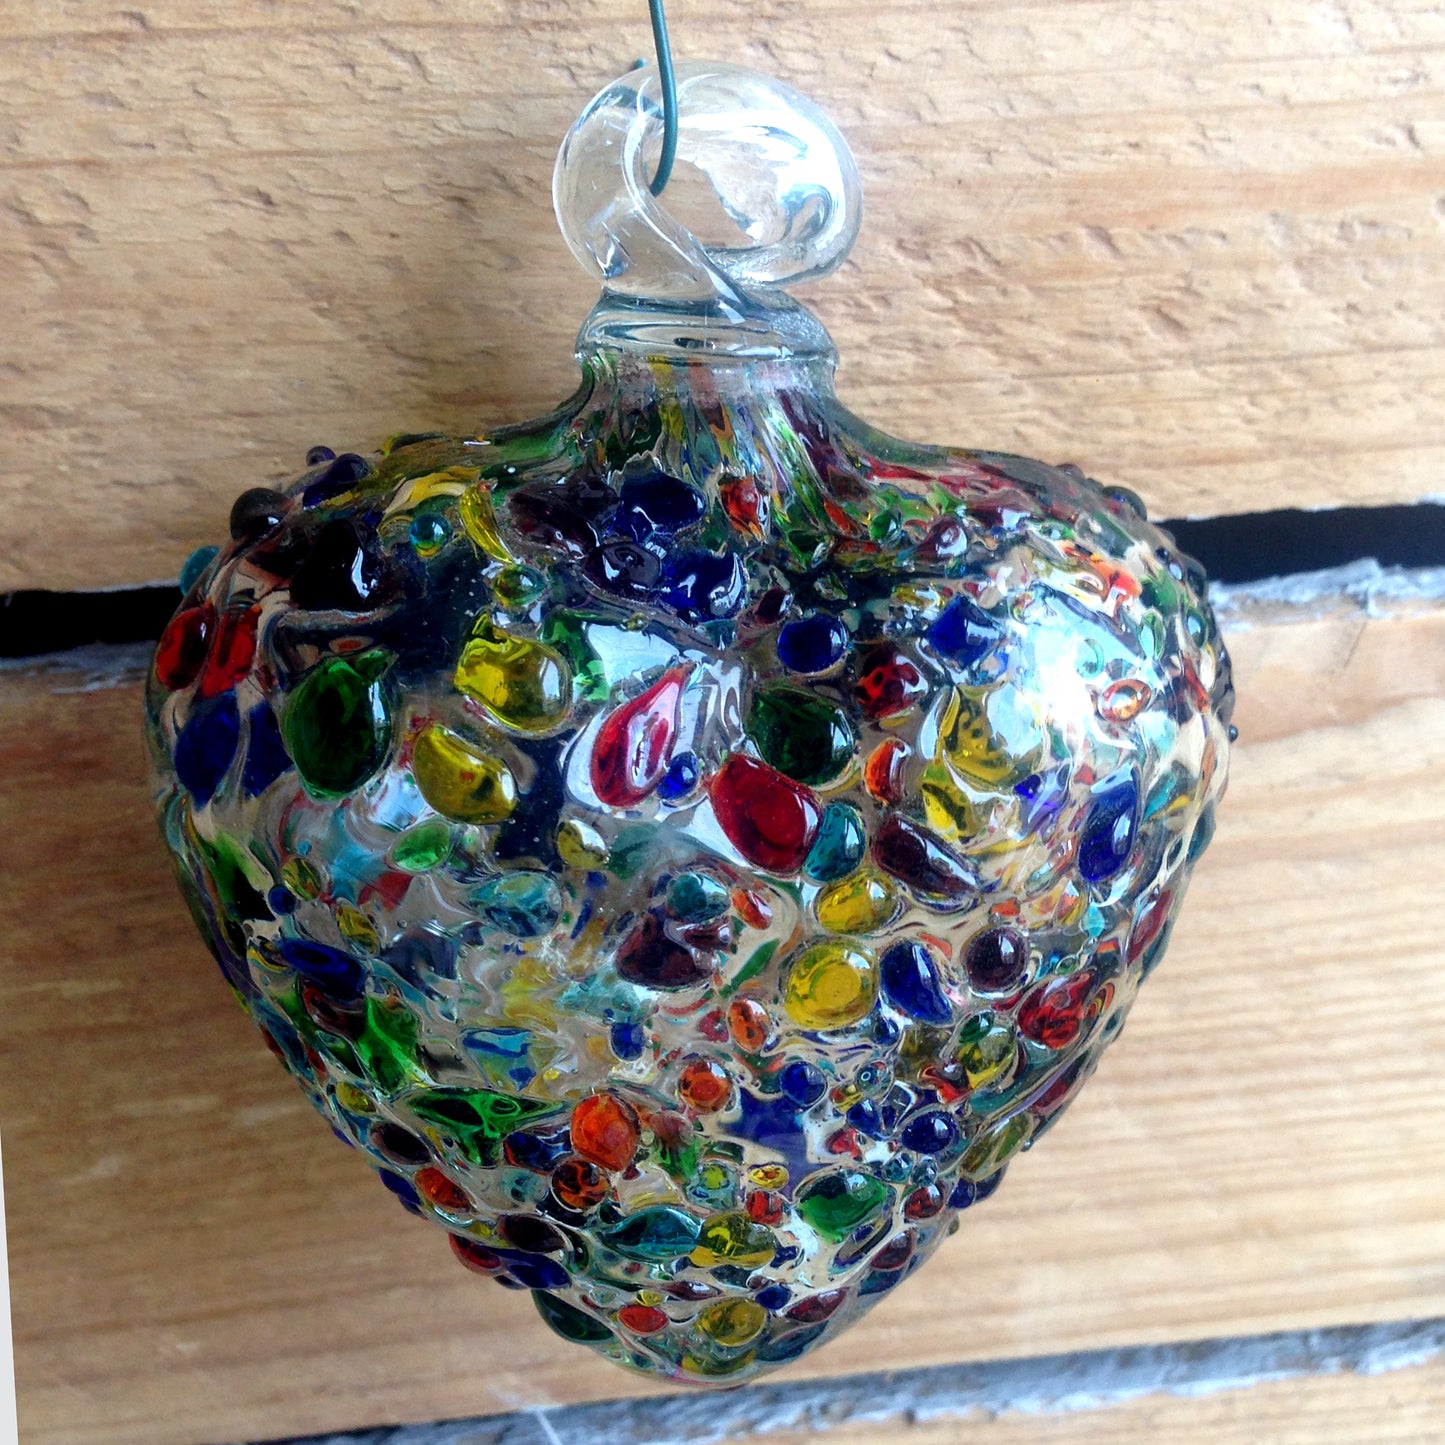 Barcelona Edition - Mexican Ornamental hand blown glass heart